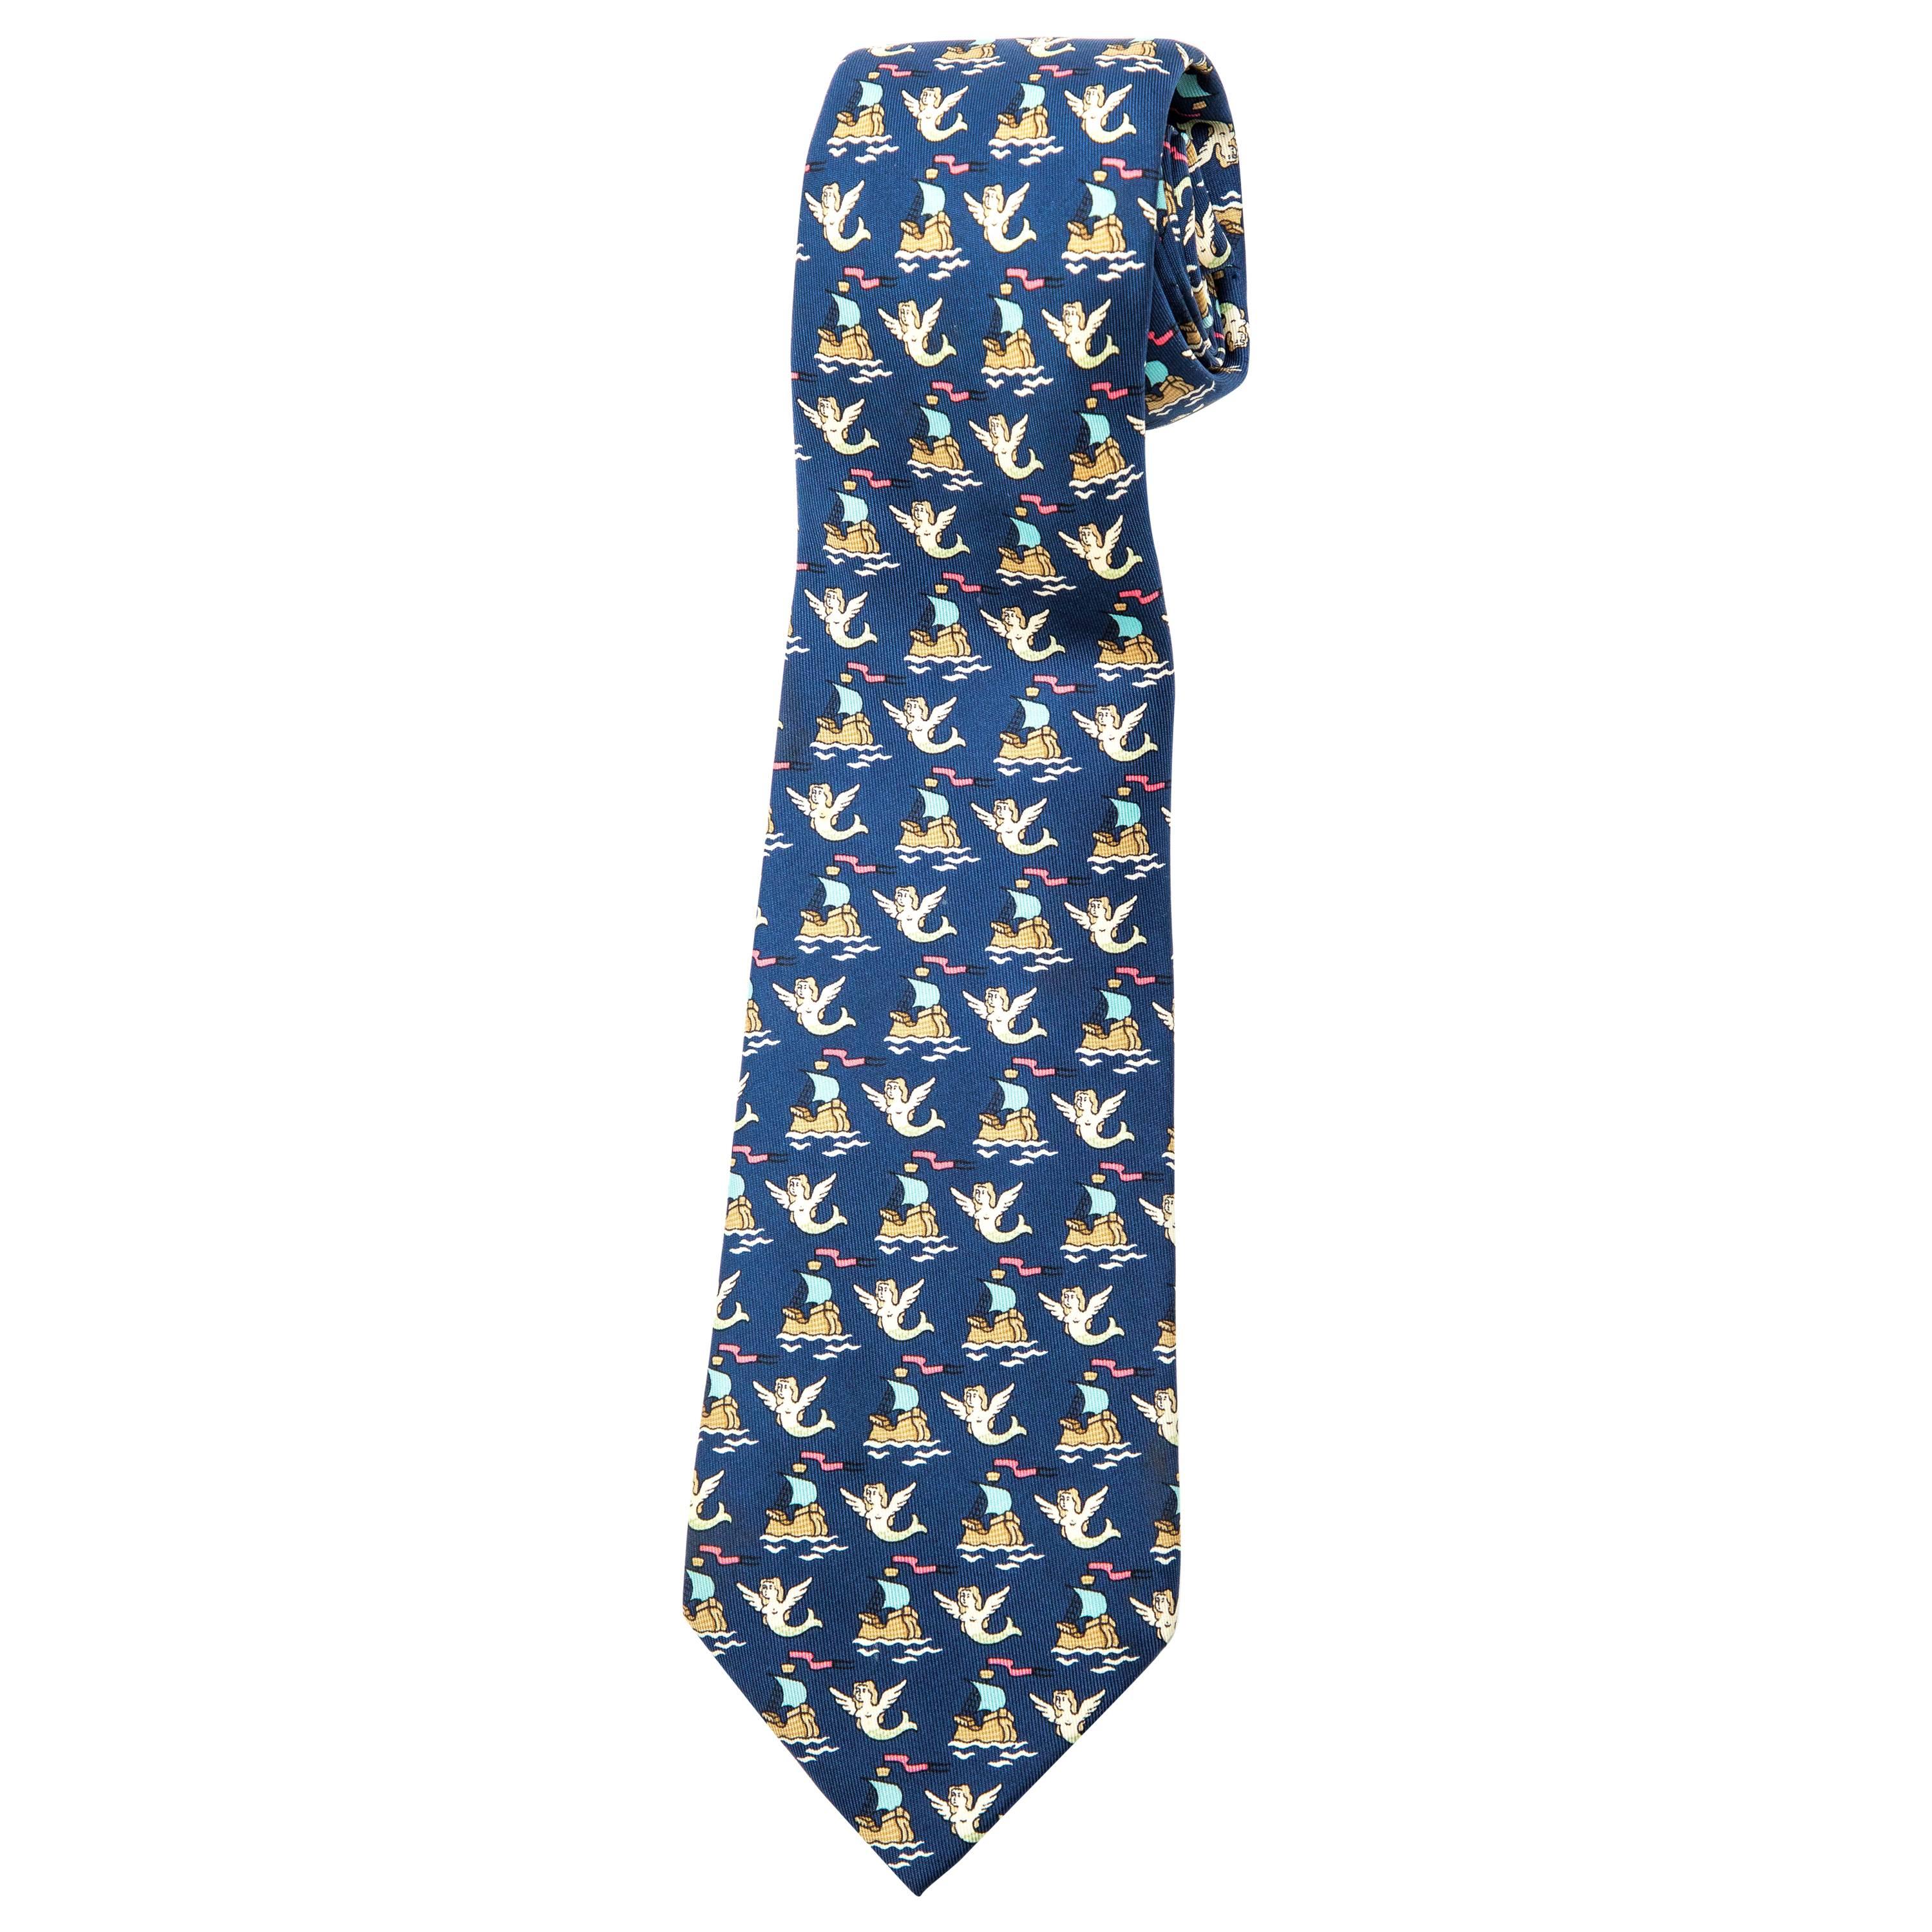 Hermes Navy Blue Printed Silk Tie, Circa 1990's